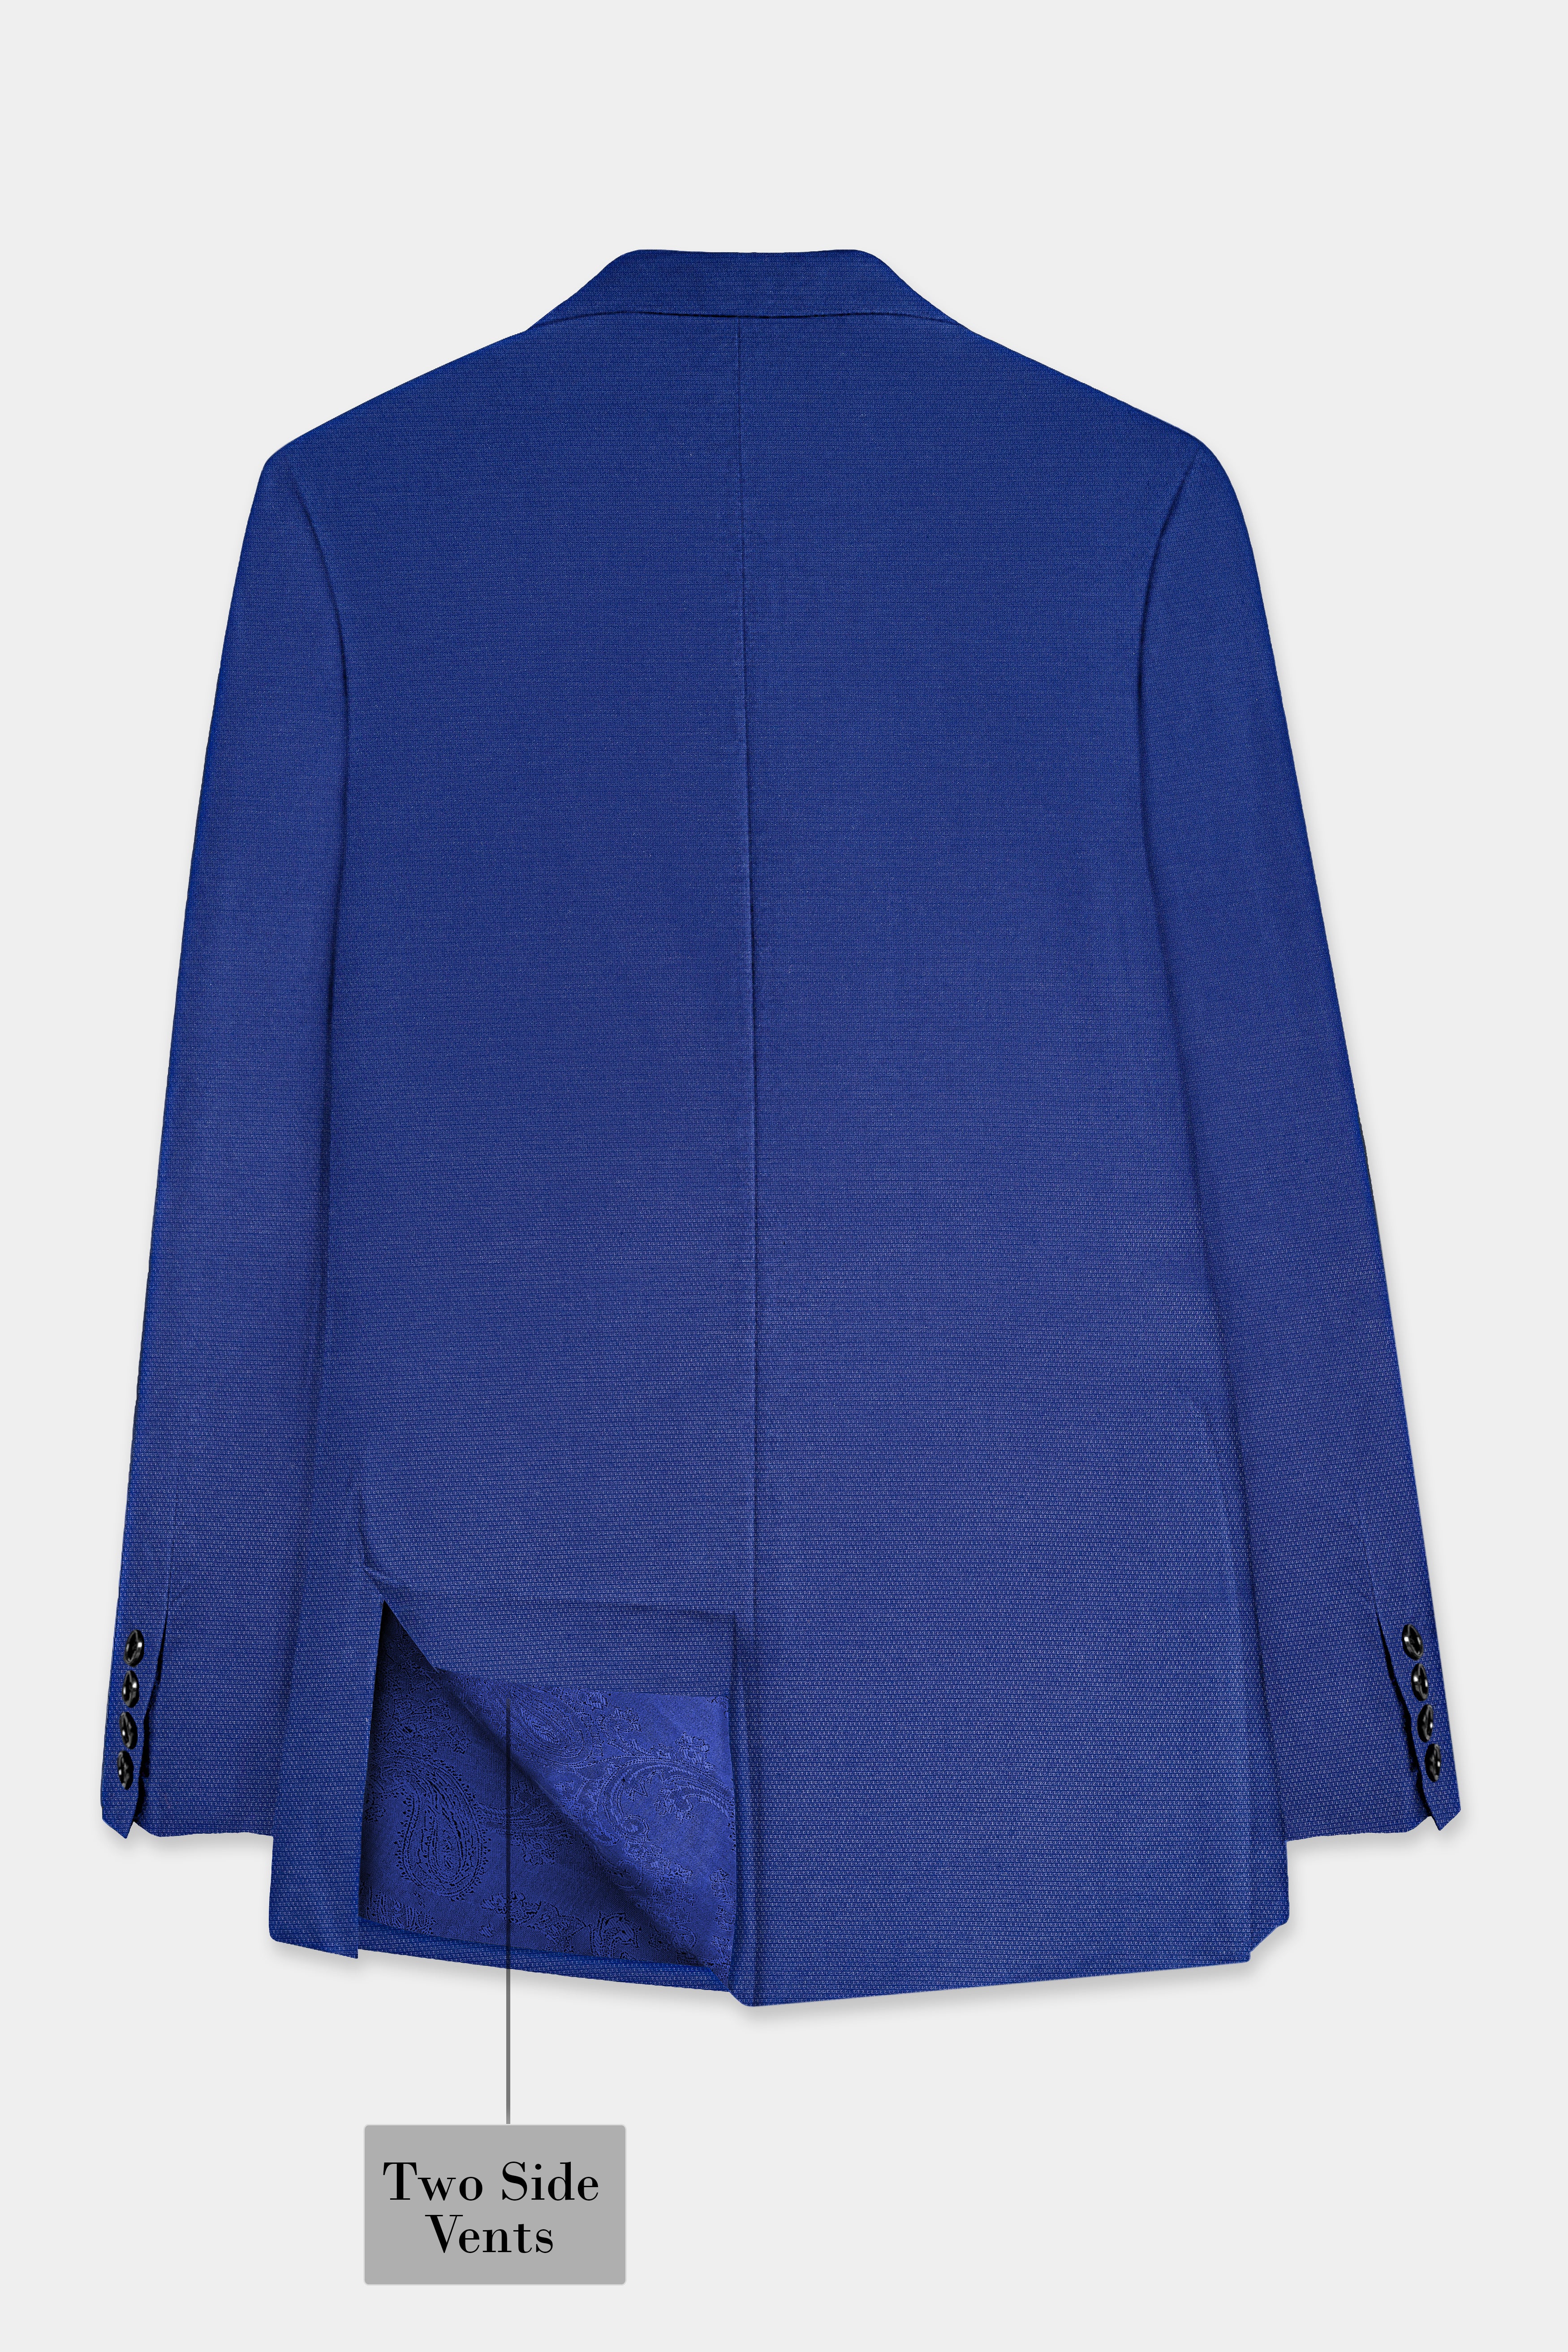 Catalina Blue Dobby Textured Wool Blend Blazer